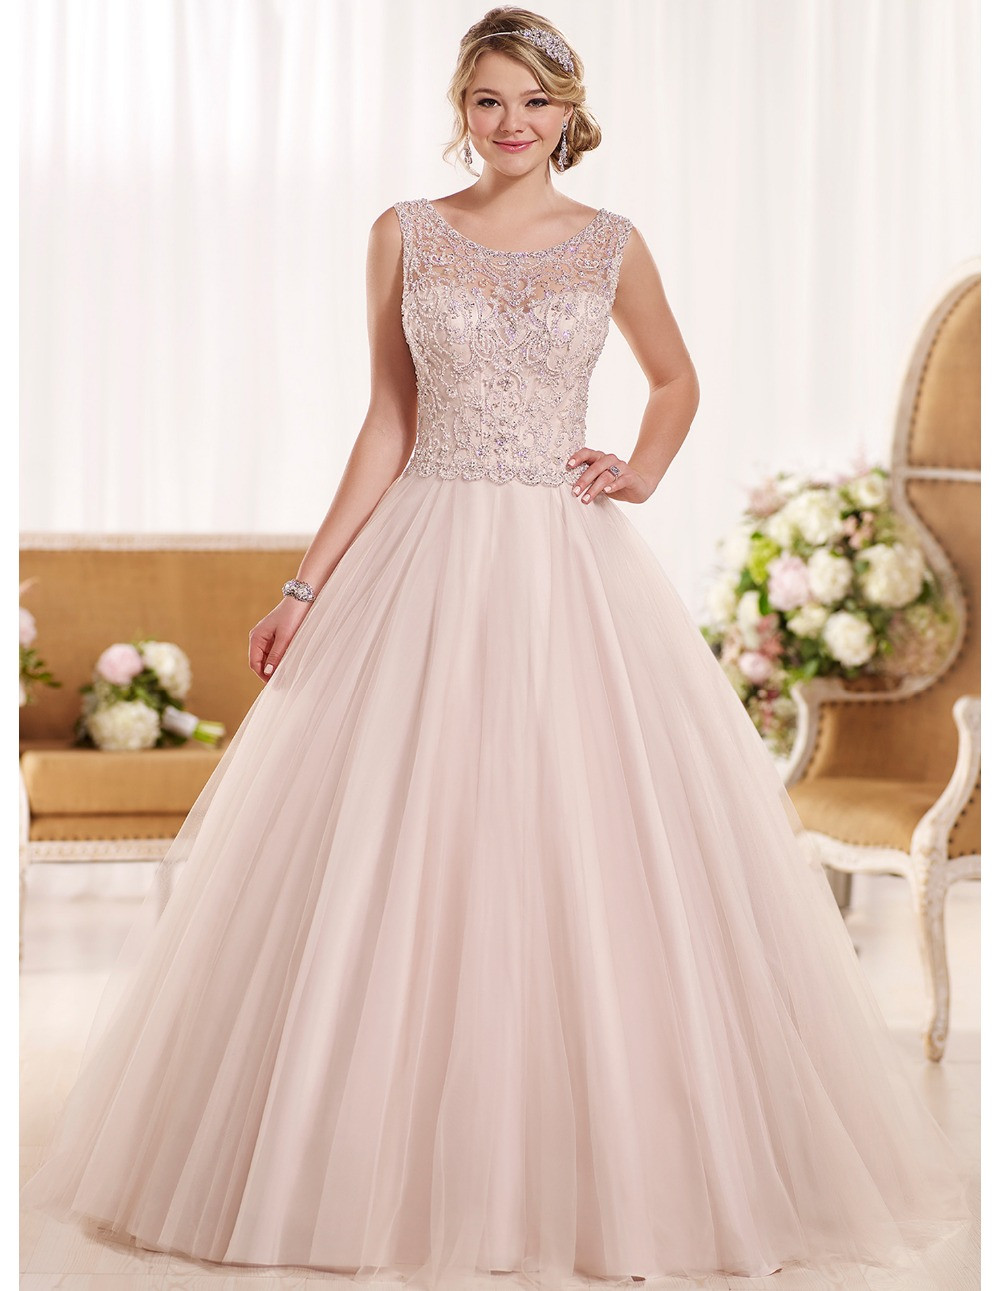 Blush Pink Wedding Gown
 Cheap backless china blush pink wedding dresses plus